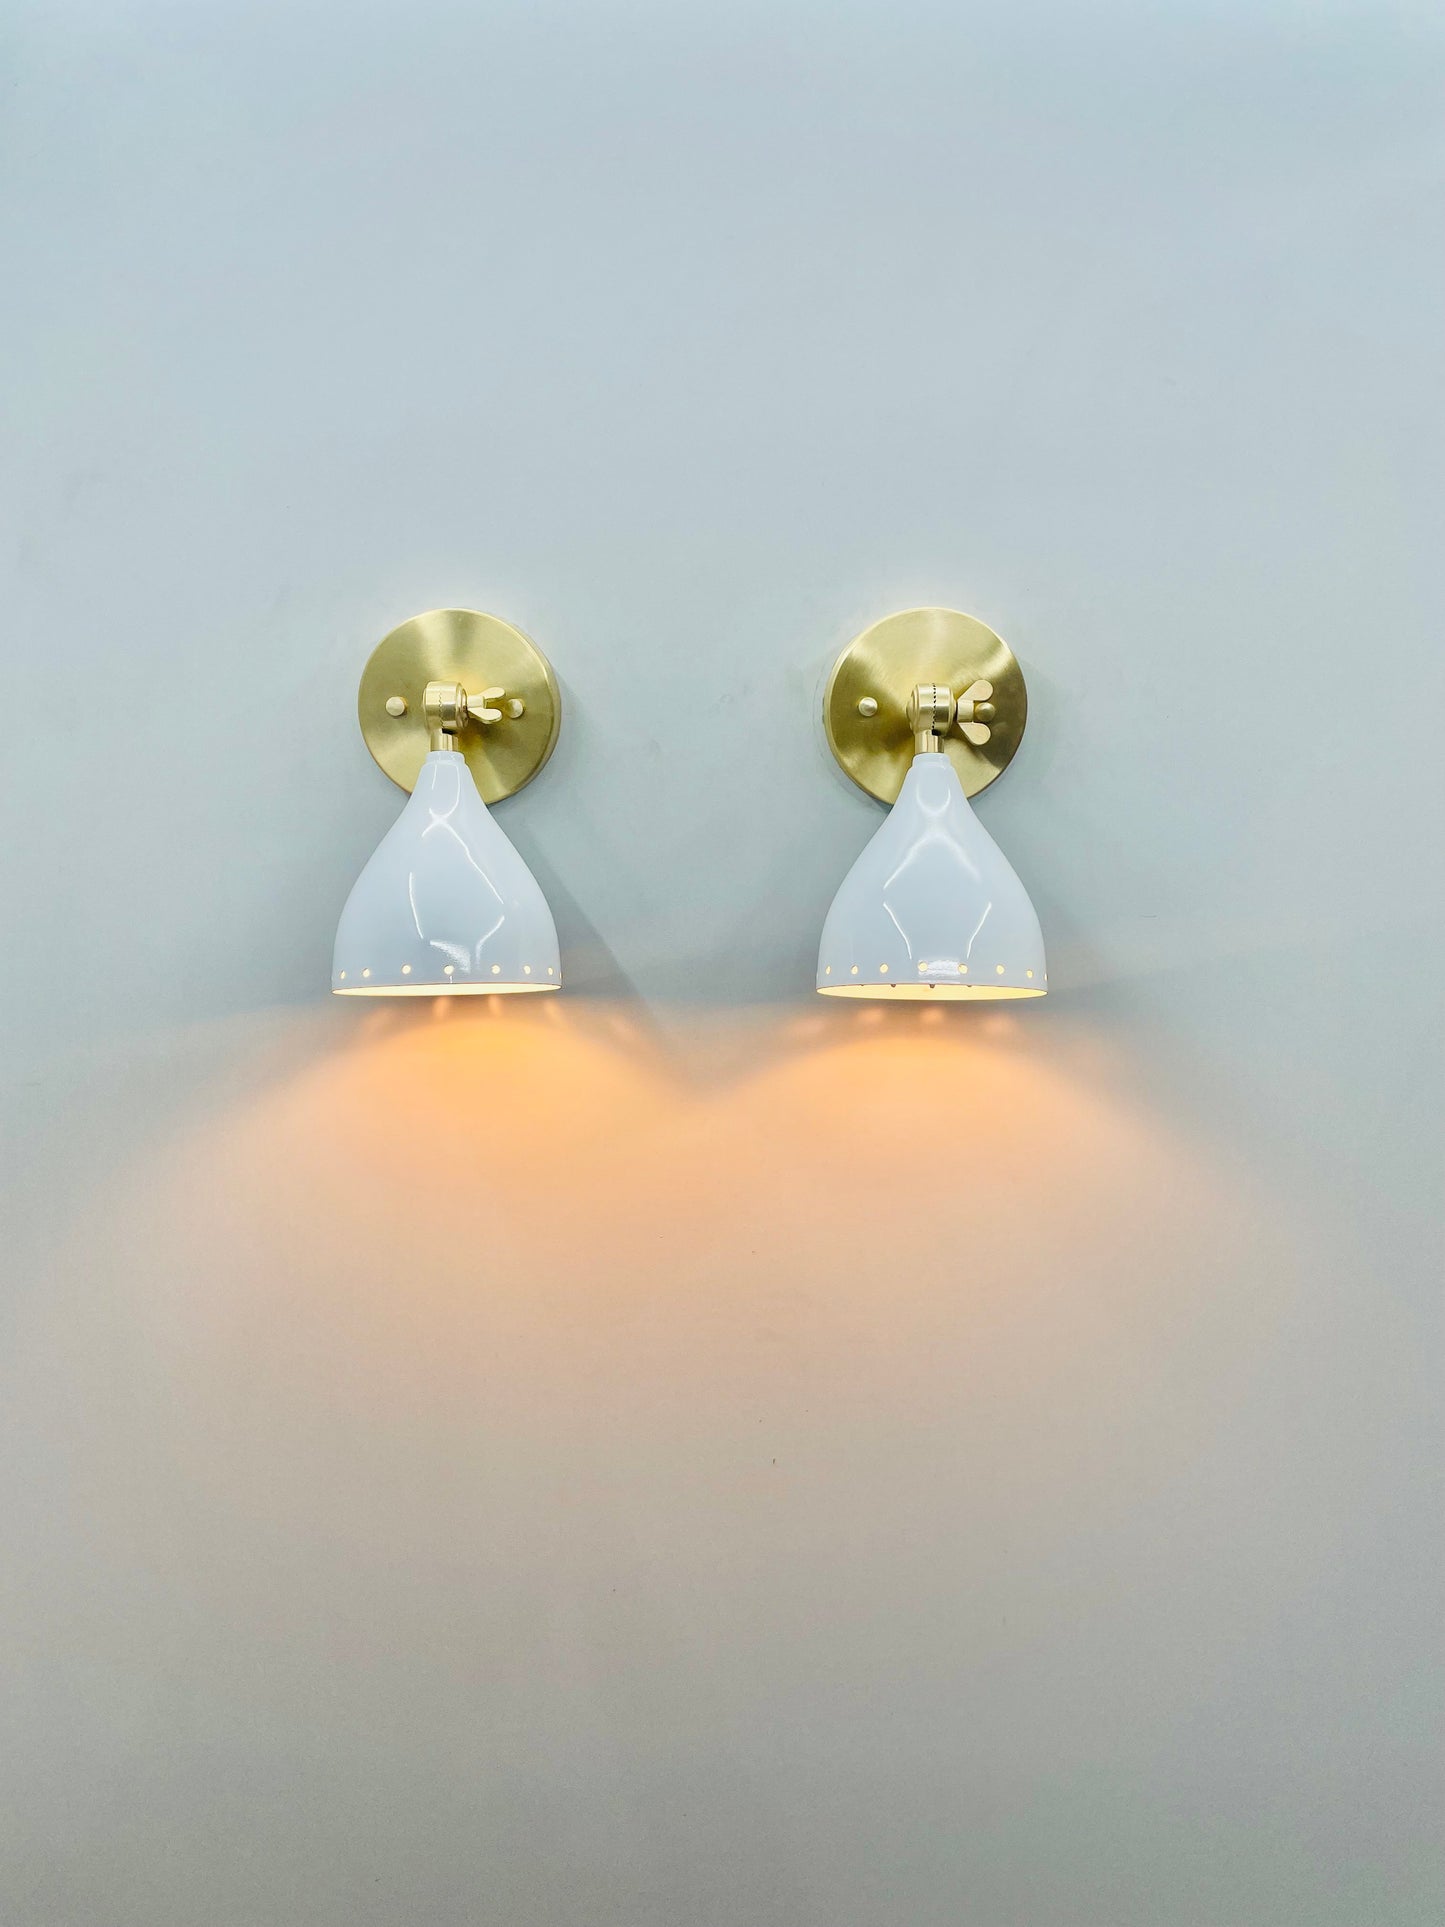 Wall Sconce Diabolo Pair of Modern Italian Wall Lights Wall Fixture Lamps - Global Lights Hub